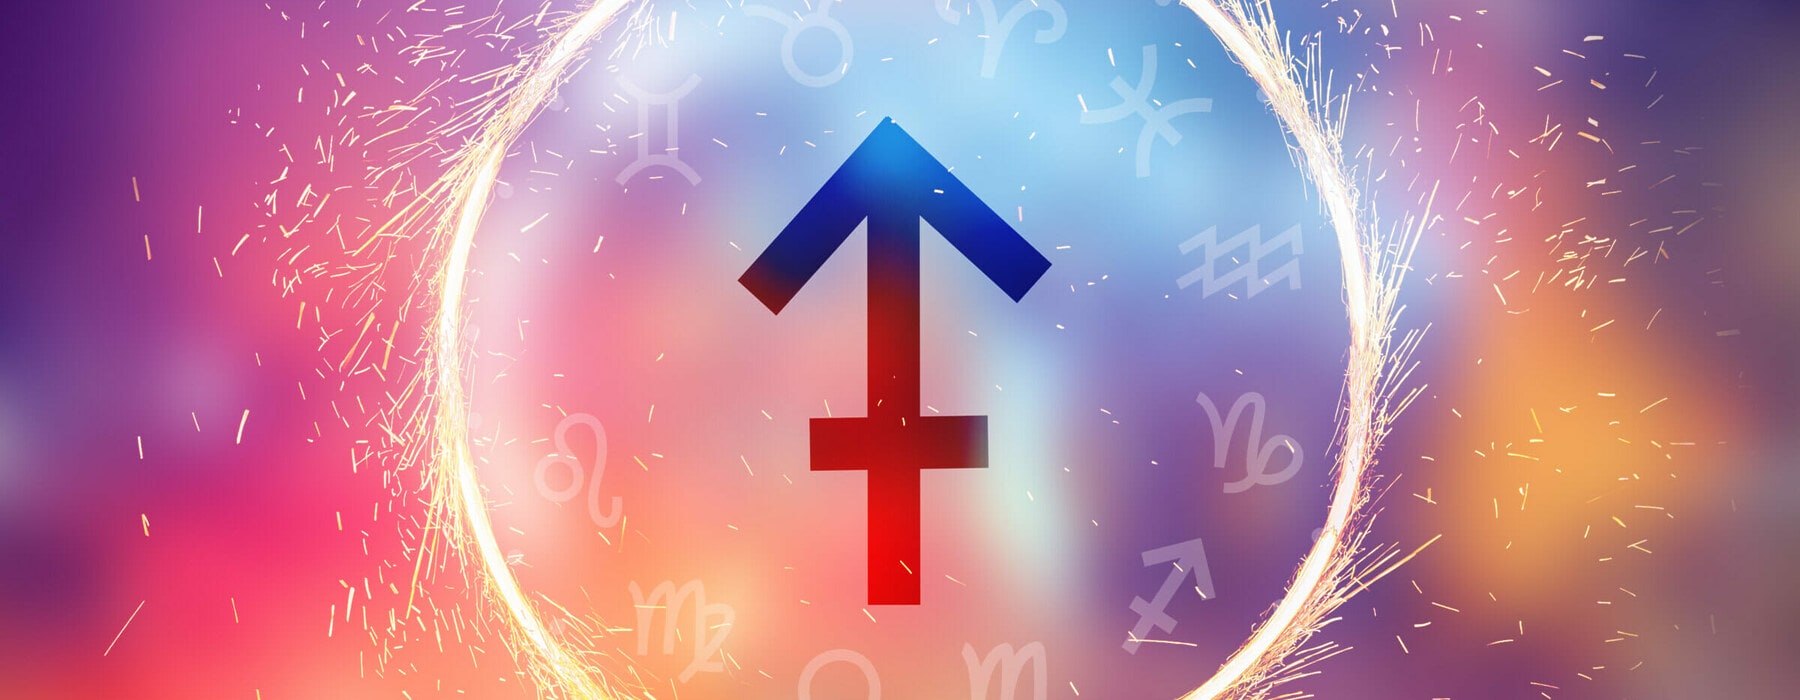 Sagittarius symbol on a colorful background light